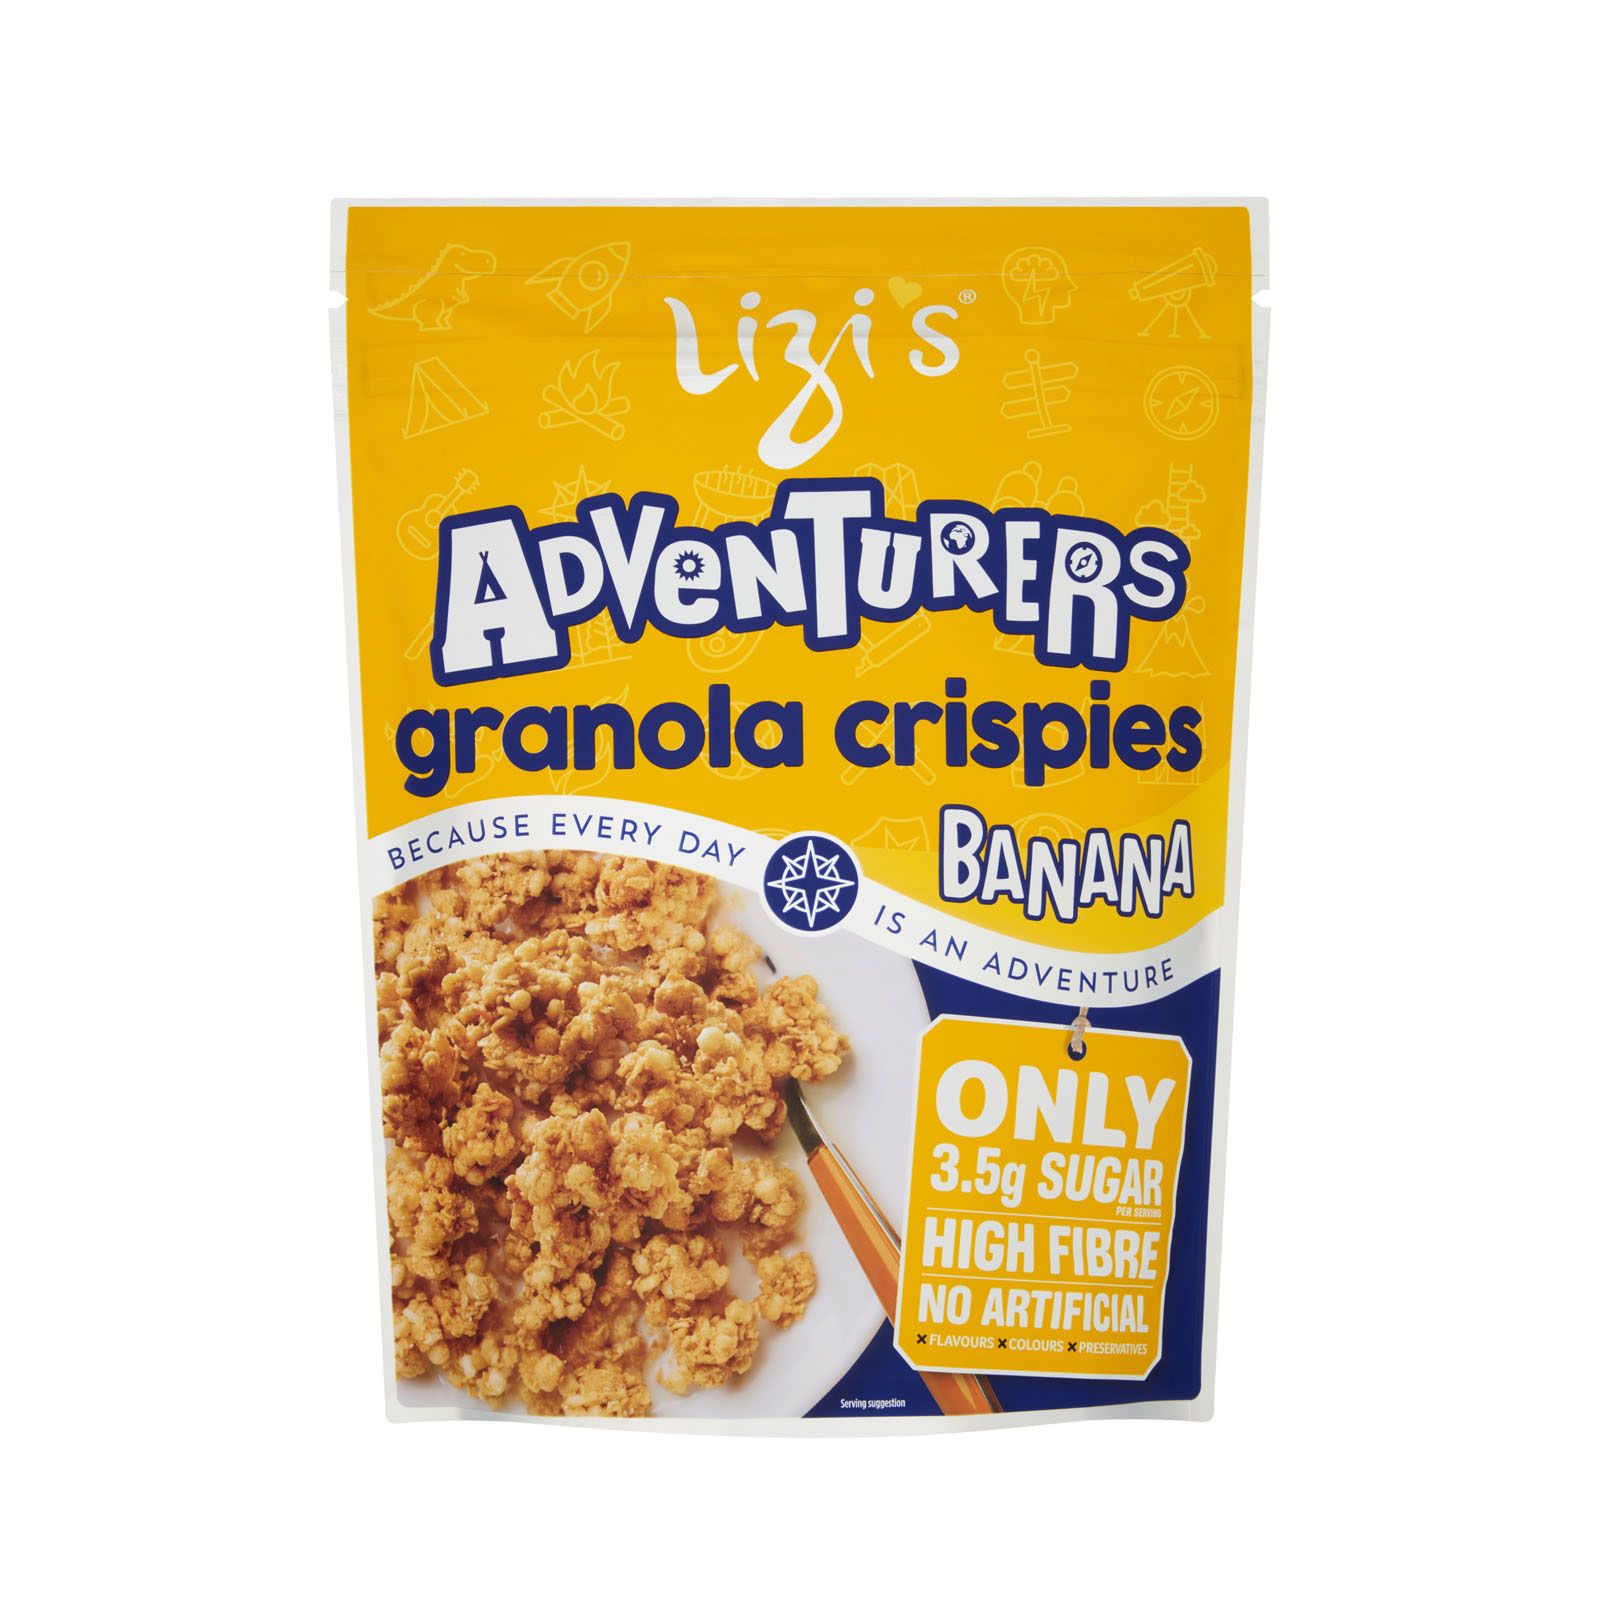 Adventurers Banana Granola Crispies - Image